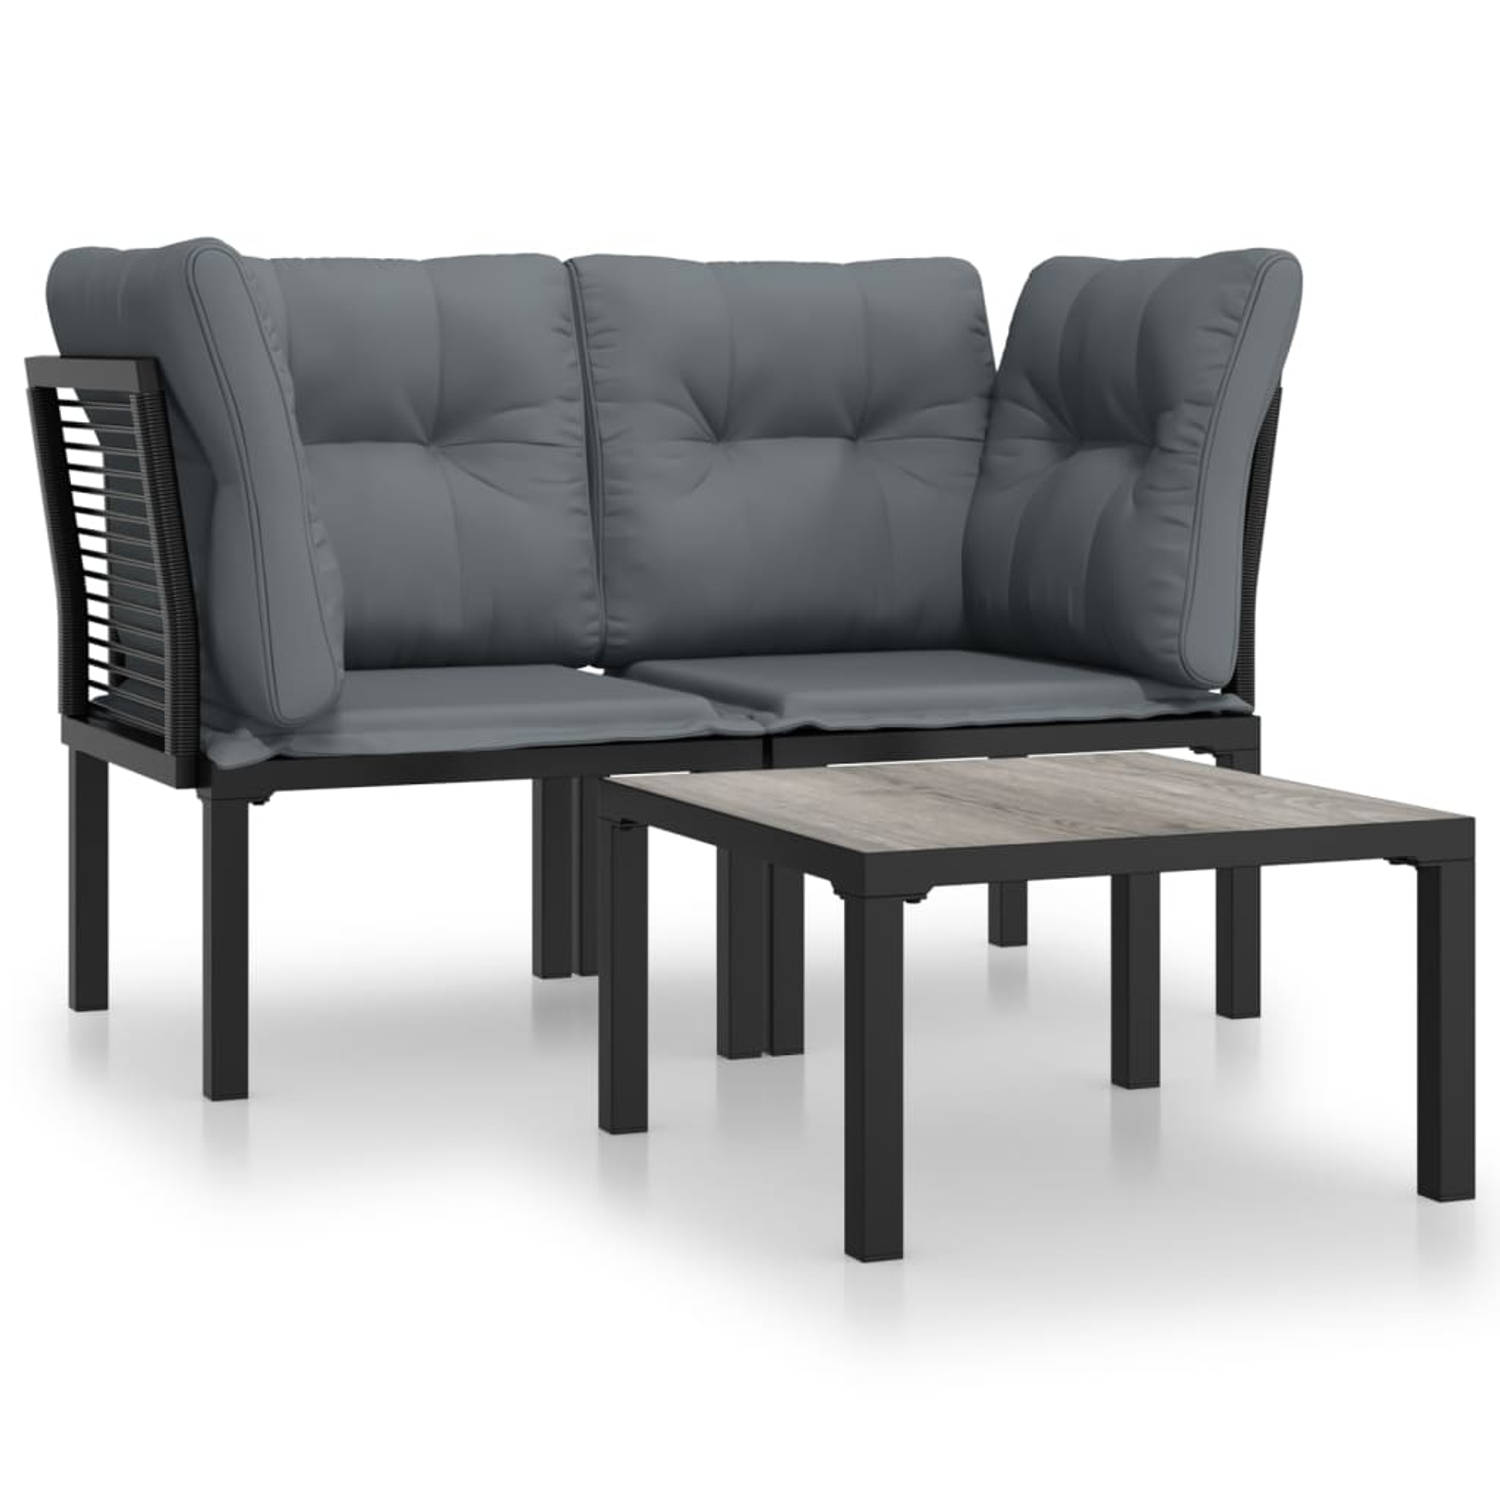 The Living Store Loungeset - PE-rattan - Elegant en modern ontwerp - Weerbestendig - Stabiel en stevig - Comfortabele zitervaring - Modulair ontwerp - Praktische tafel - Gemakkelij